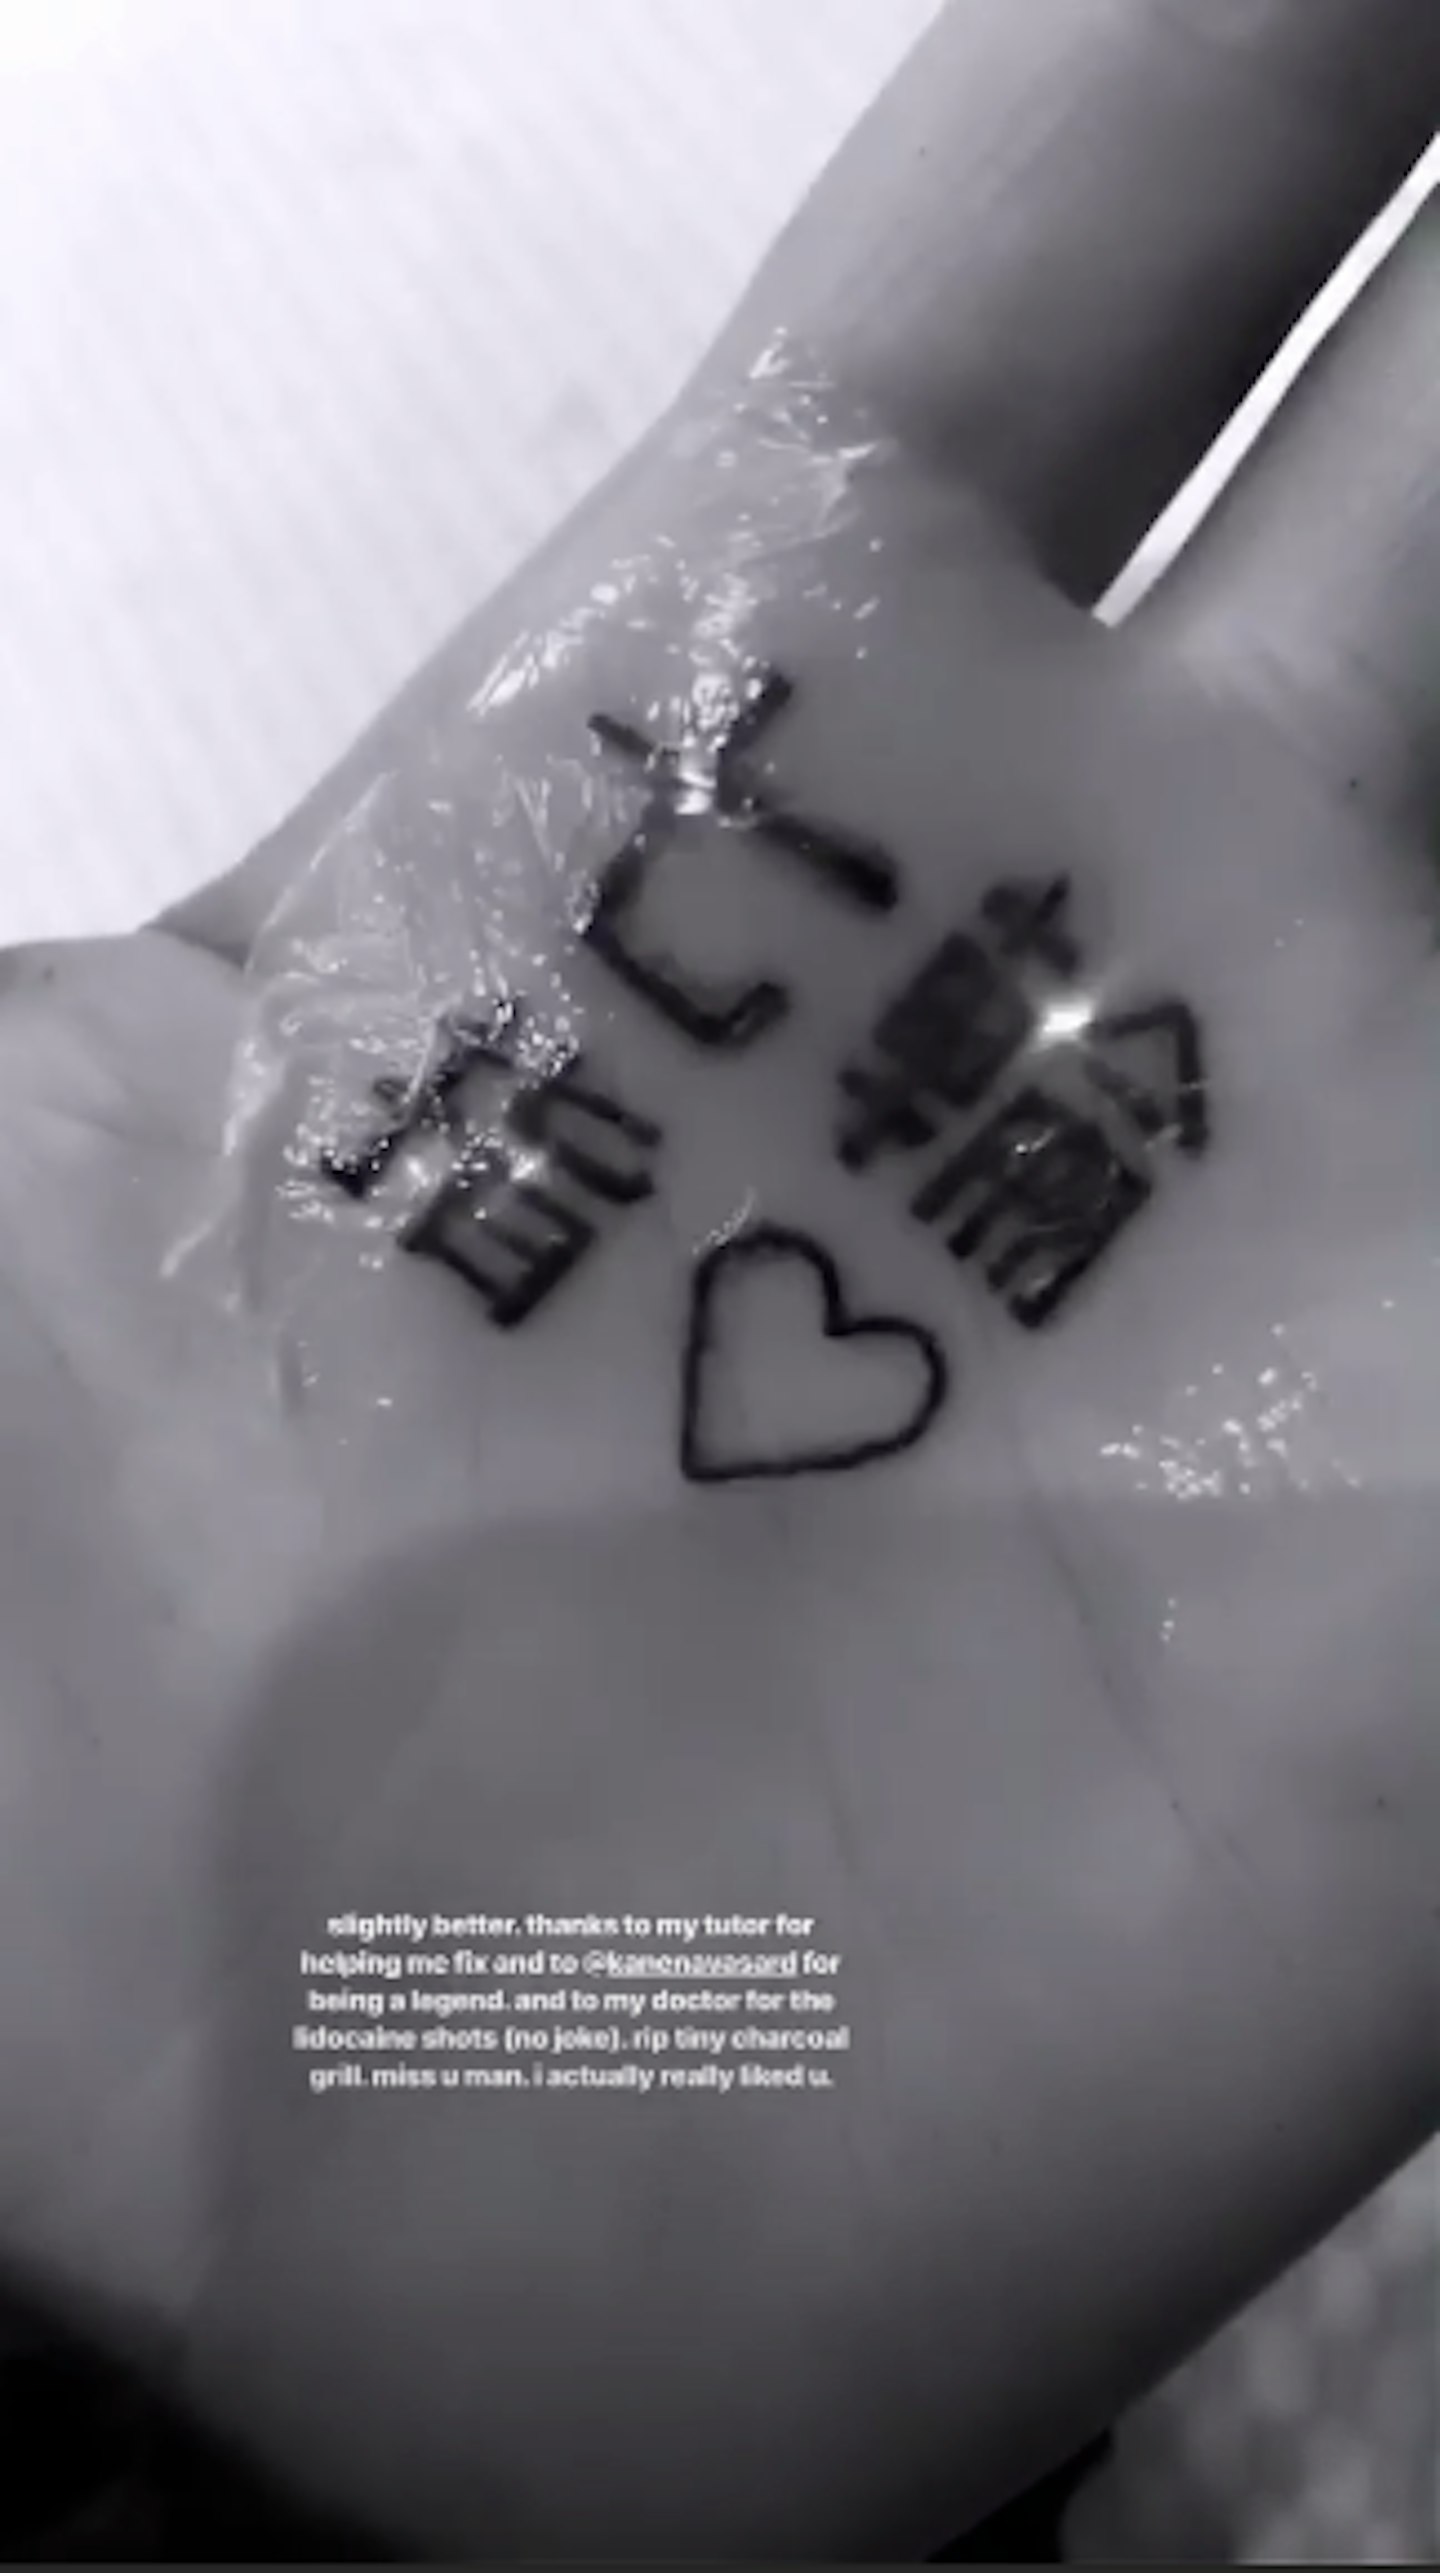 Ariana Grande's tattoo typo